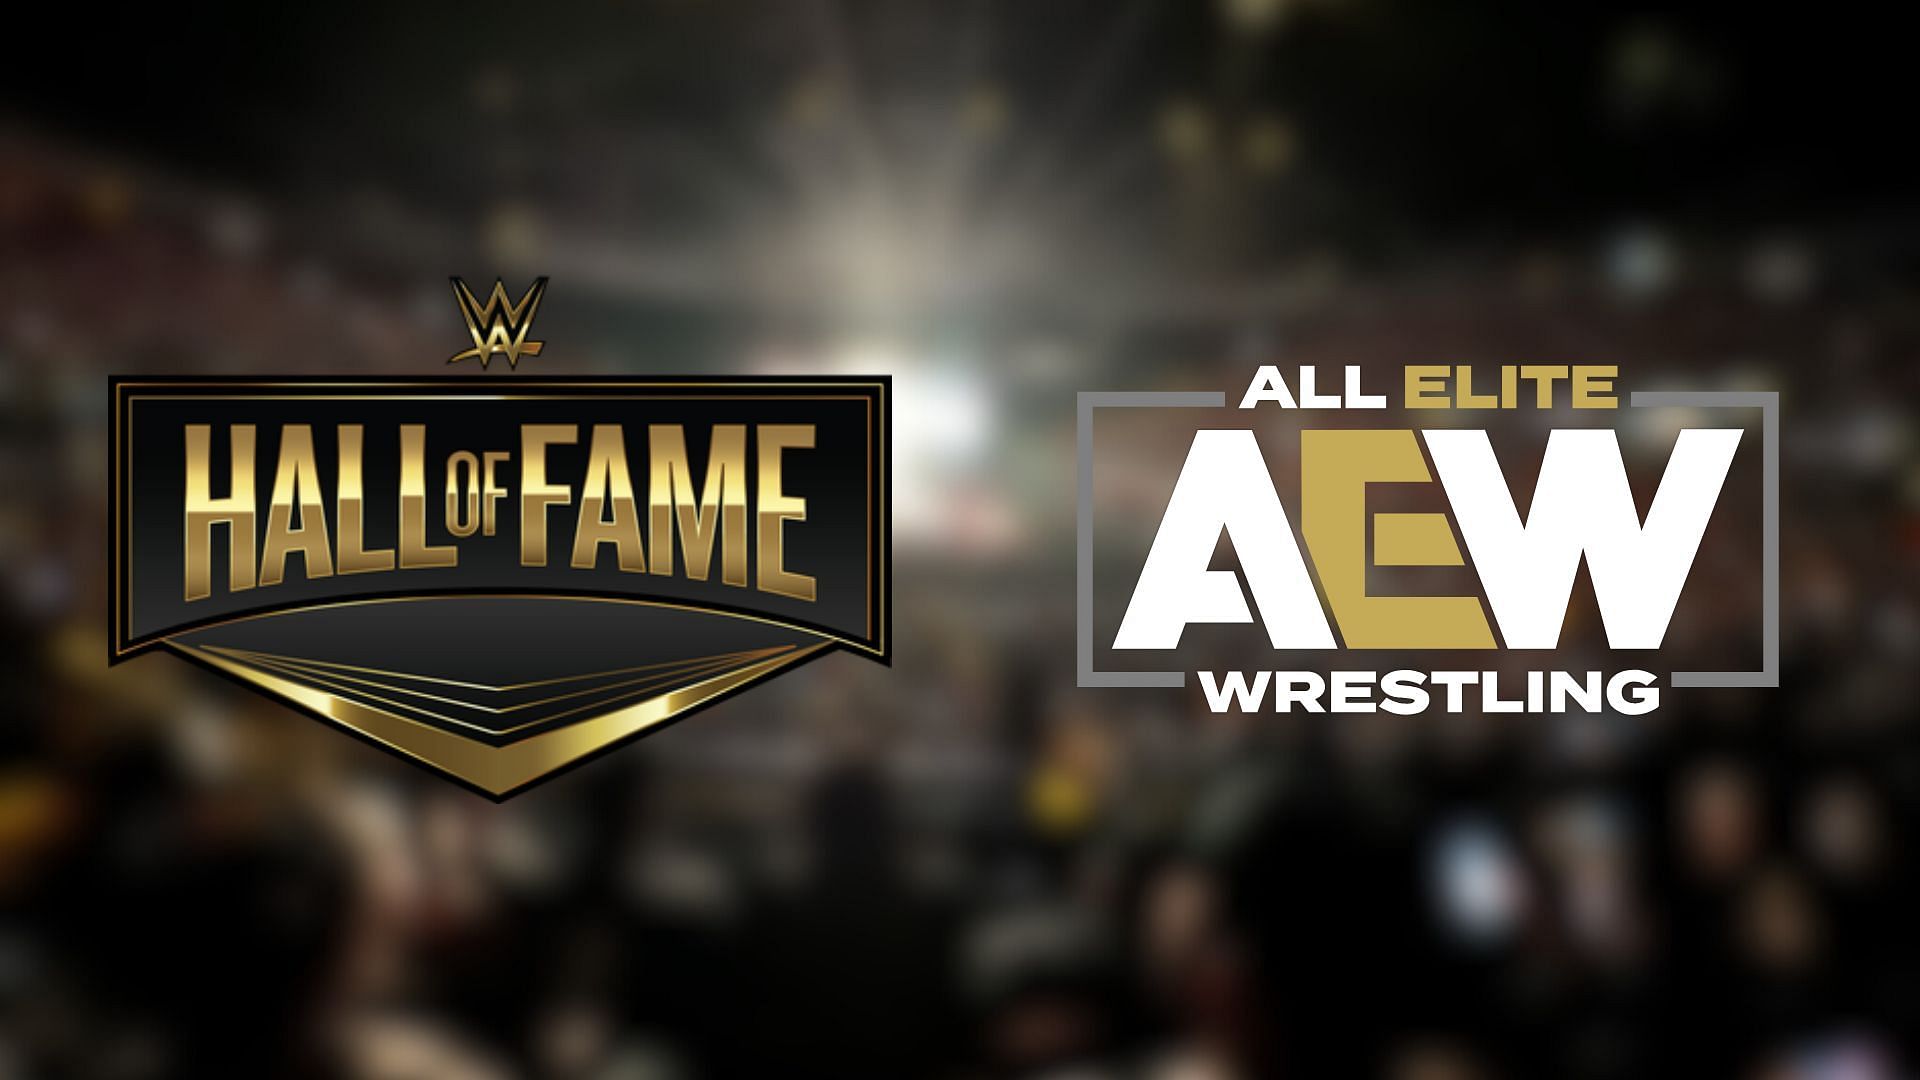 A WWE Hall of Famer was taken off AEW TV